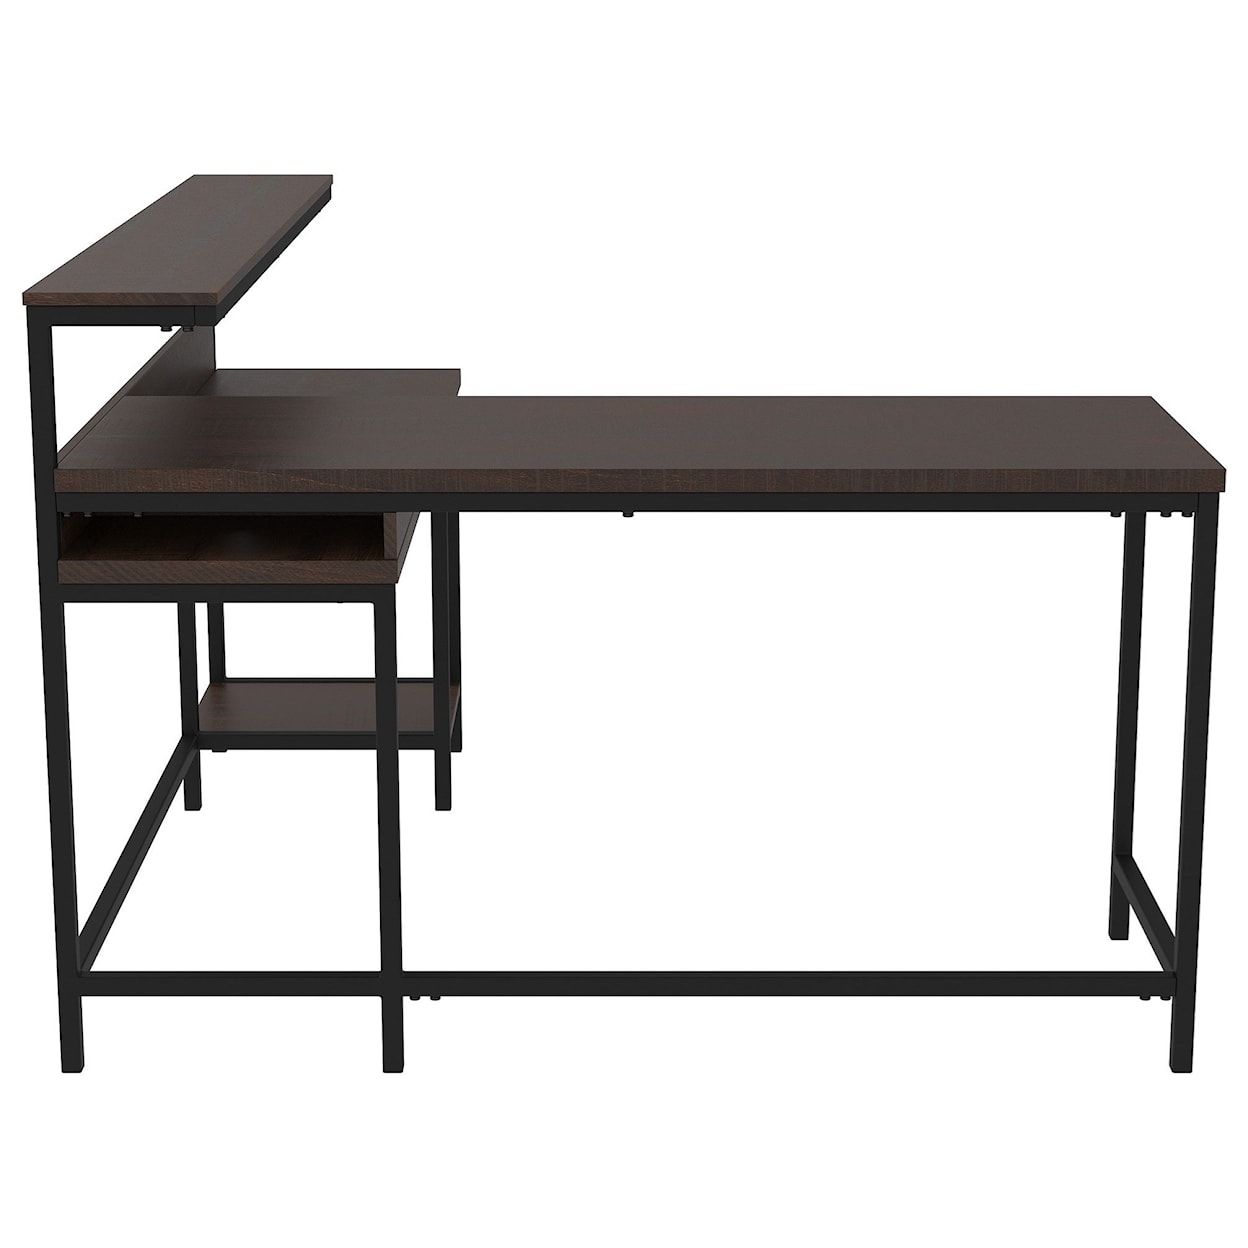 Ashley Furniture Signature Design Camiburg L-Desk with Storage